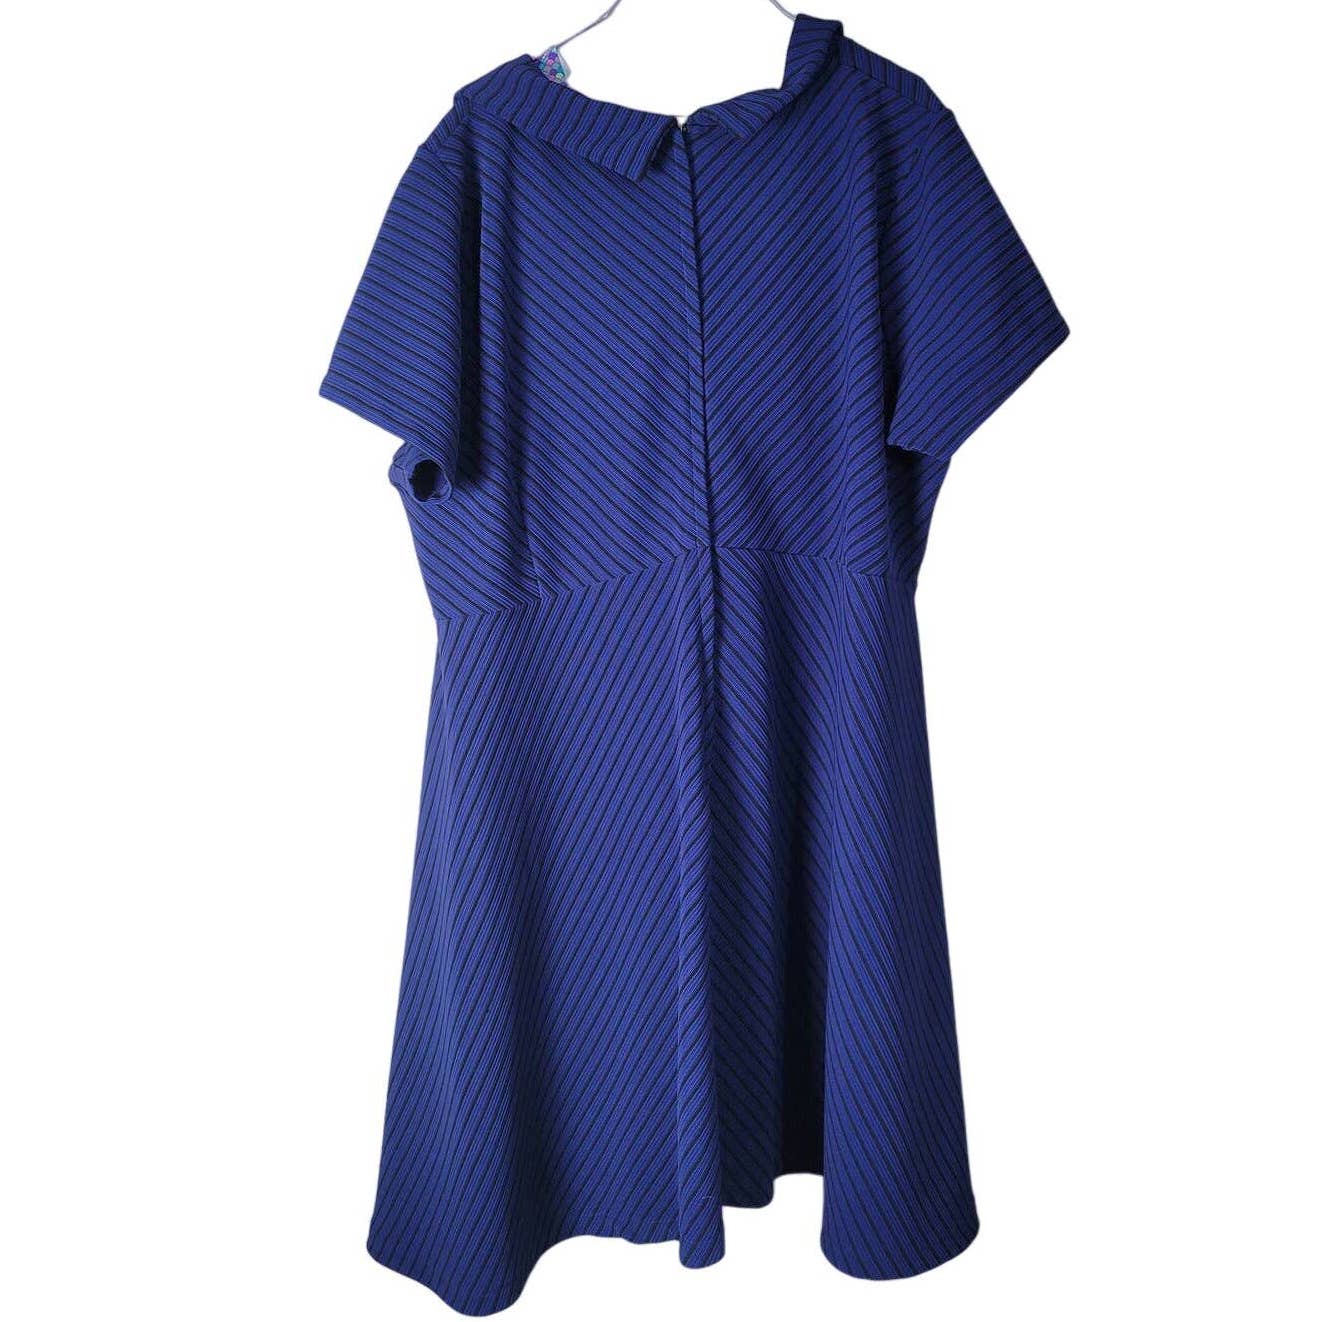 Myrtlewood Midi Dress Blue Black Striped Retro Pinup Short Sleeve Plus Size 4X